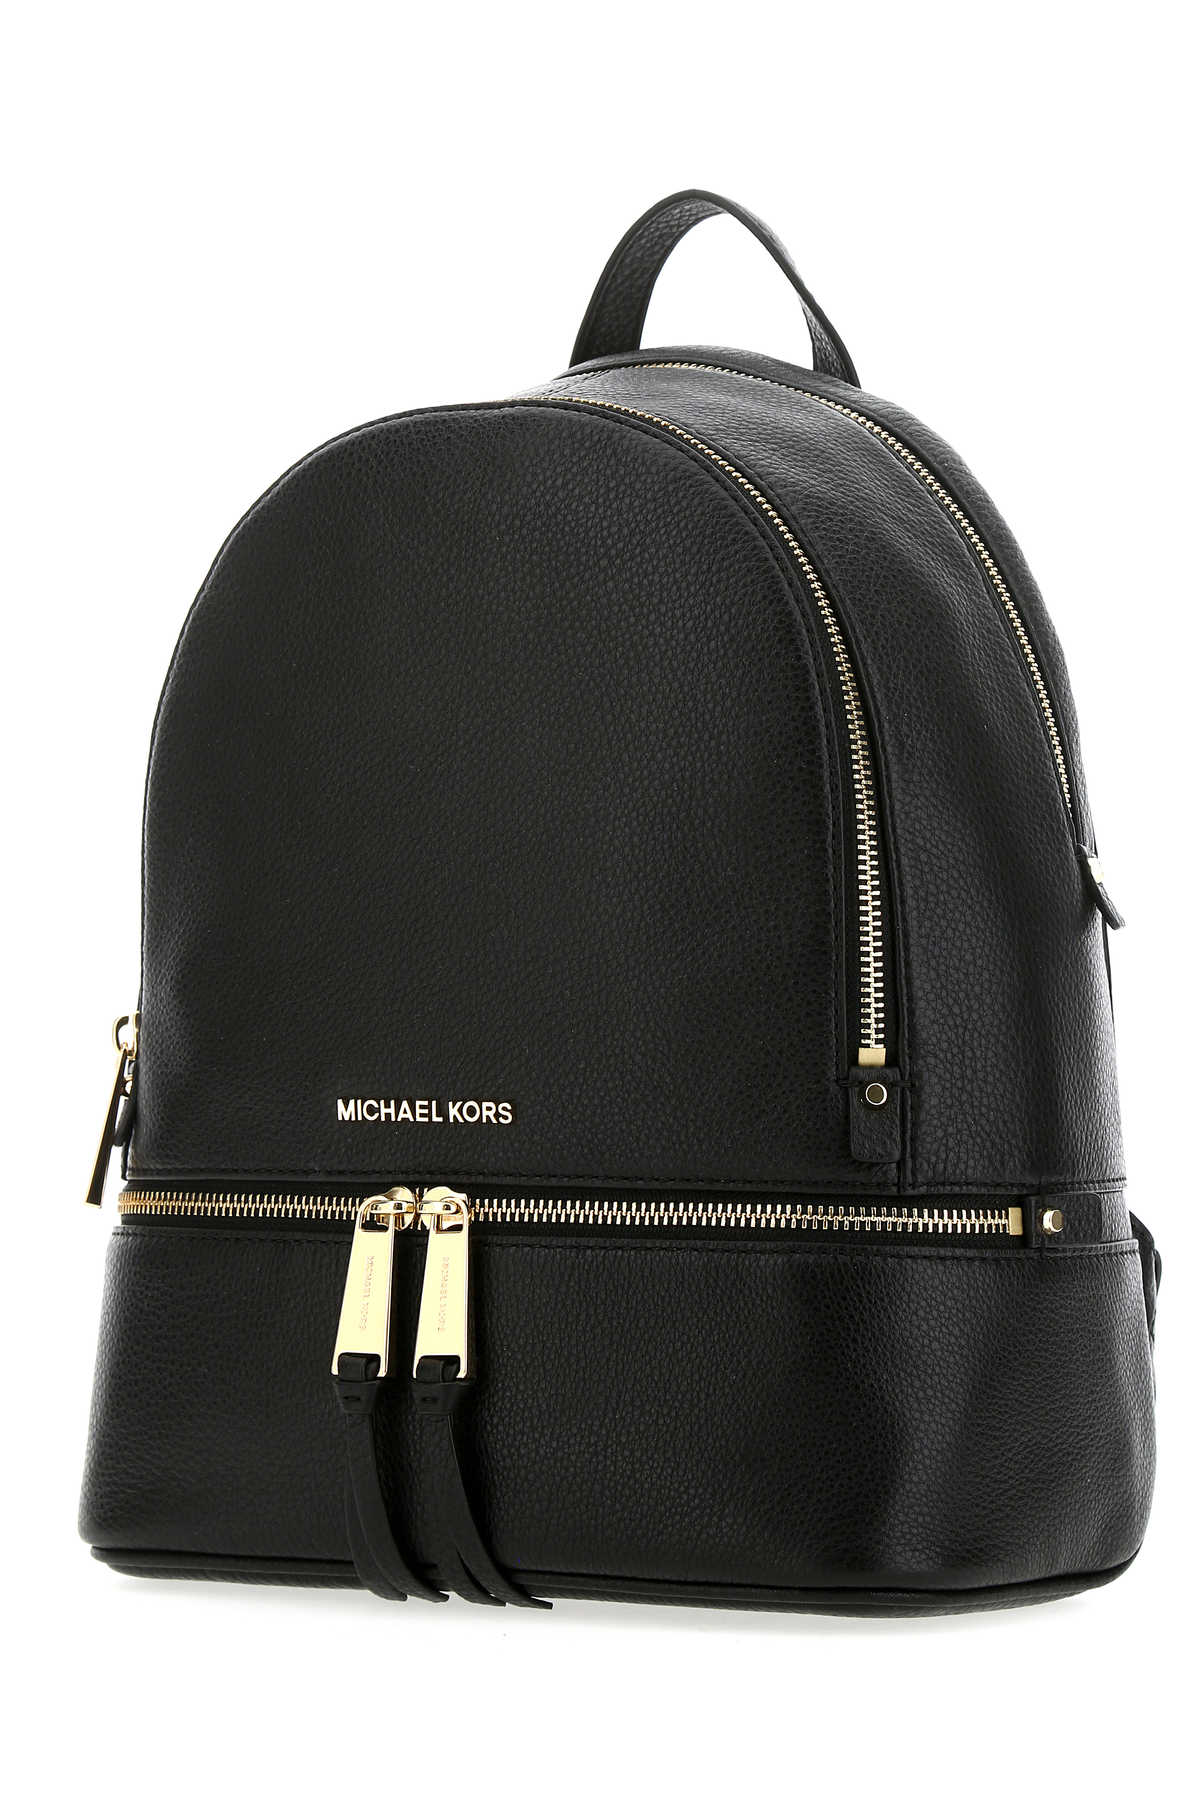 Shop Michael Kors Black Leather Medium Rhea Backpack